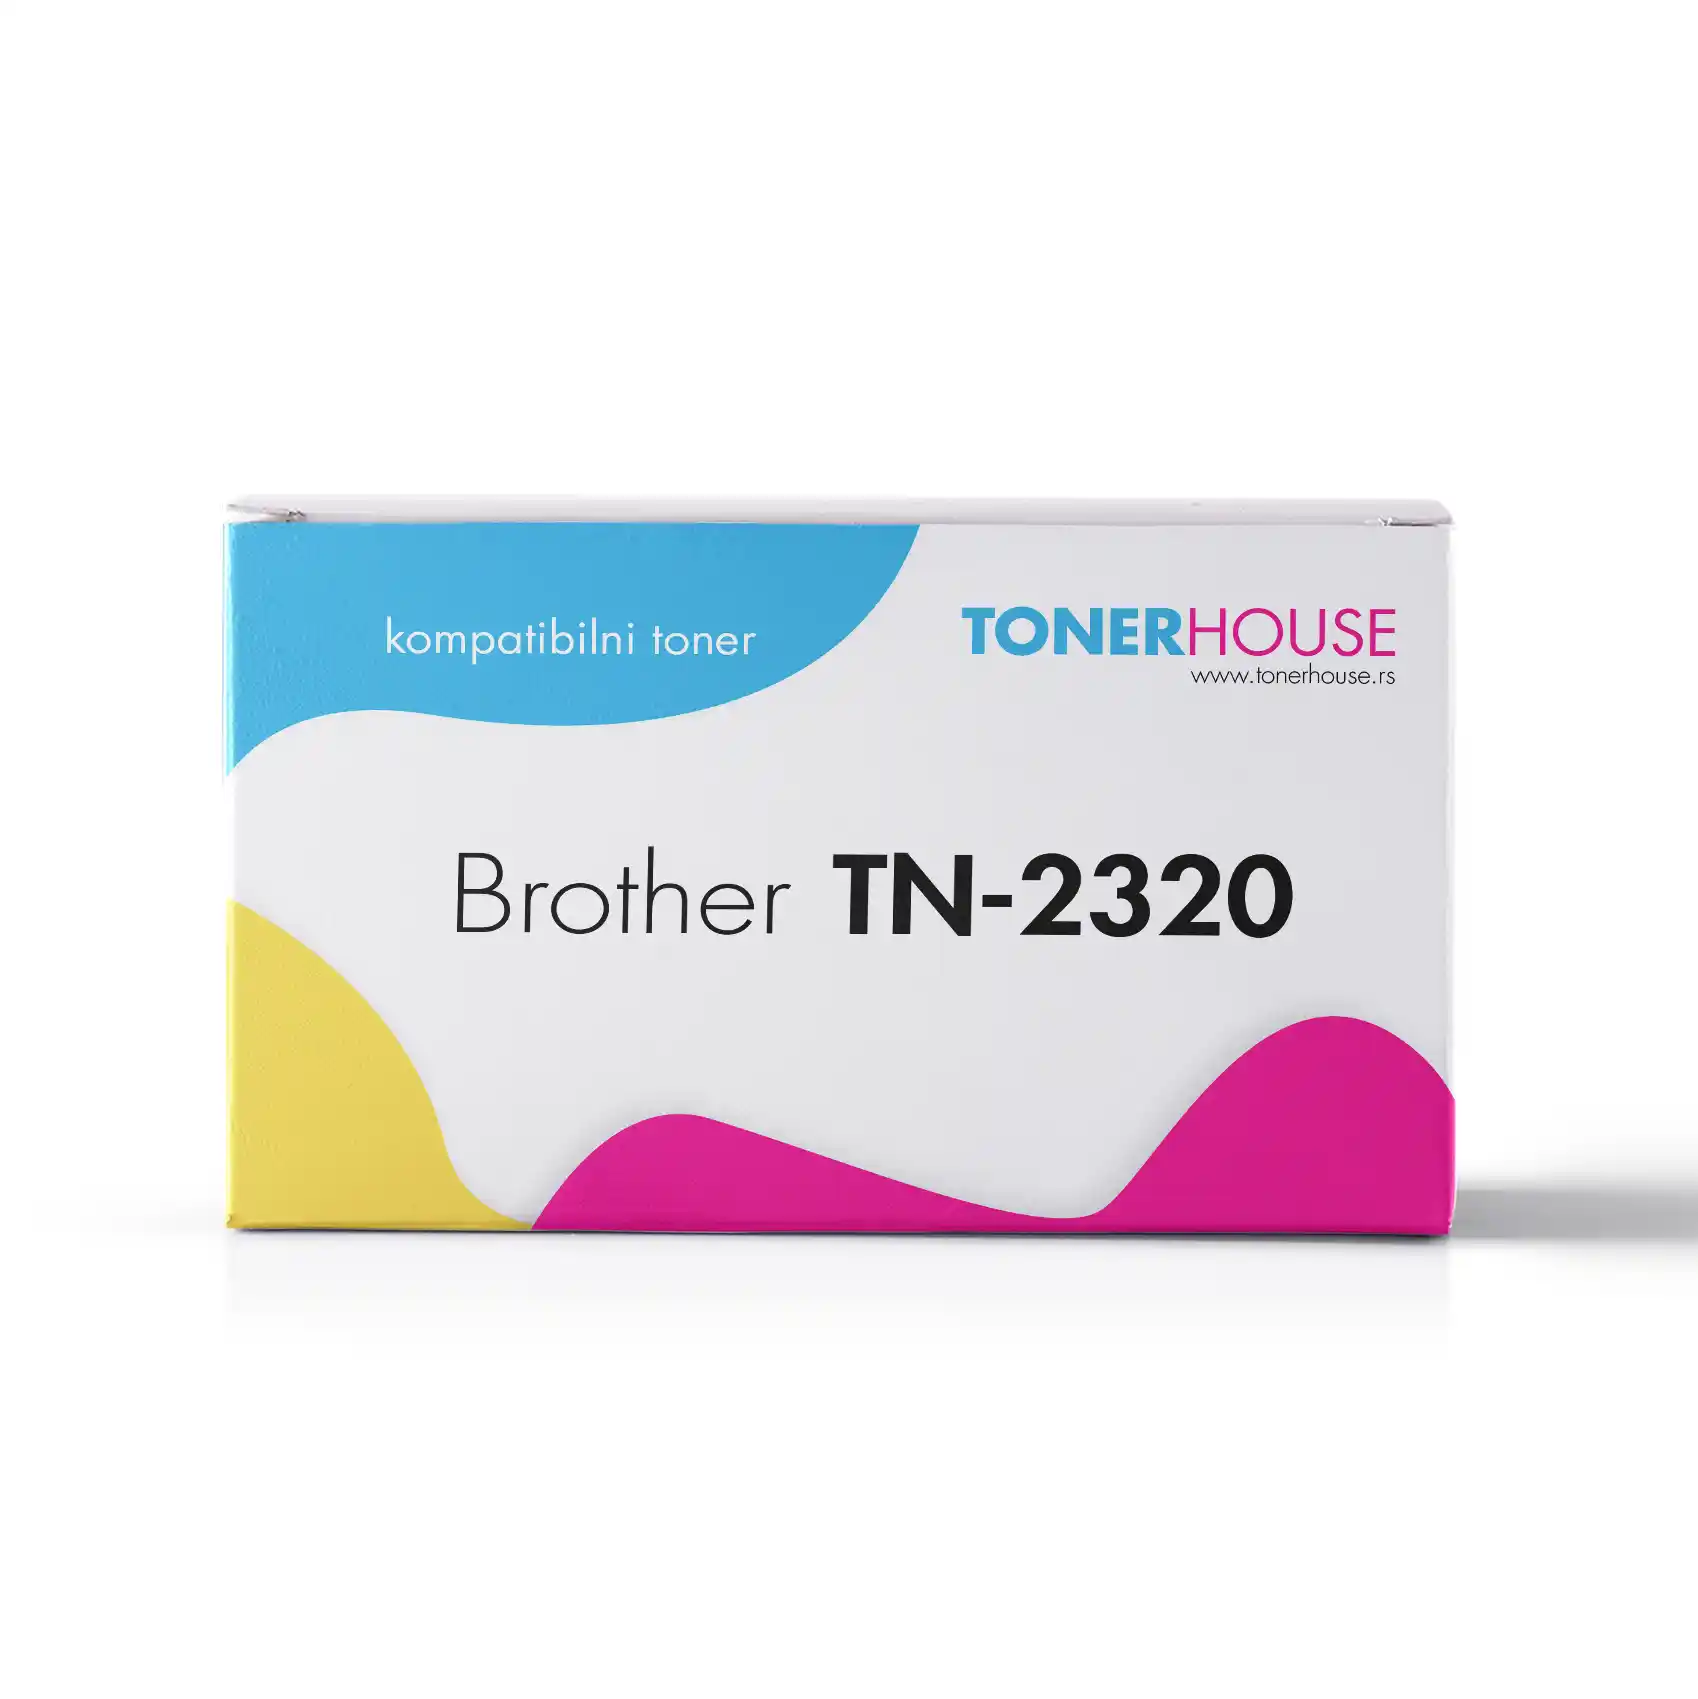 Brother TN-2320 Toner Kompatibilni